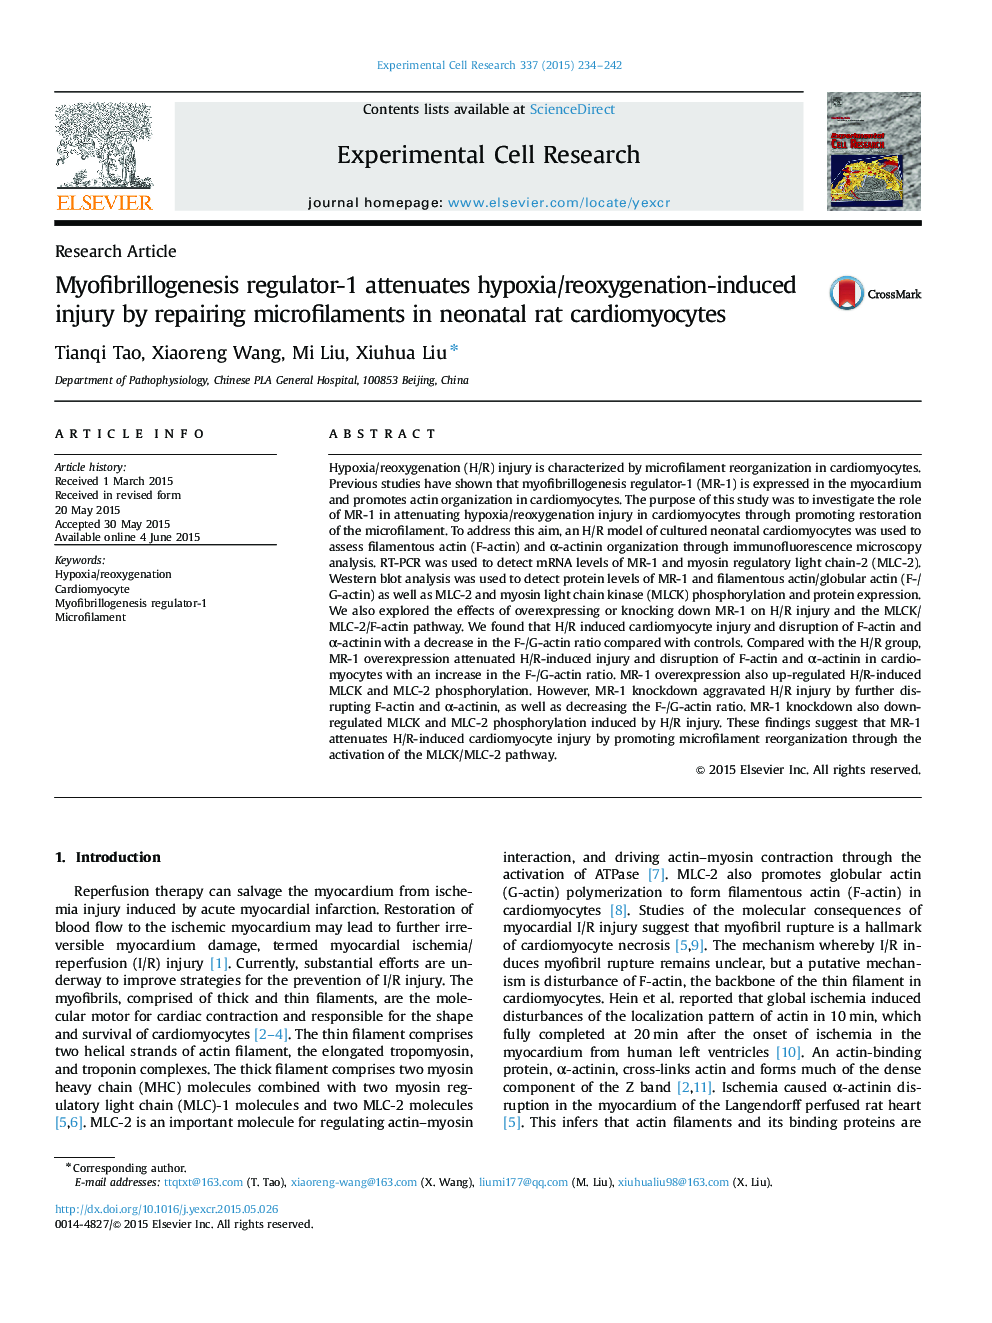 Myofibrillogenesis regulator-1 attenuates hypoxia/reoxygenation-induced injury by repairing microfilaments in neonatal rat cardiomyocytes